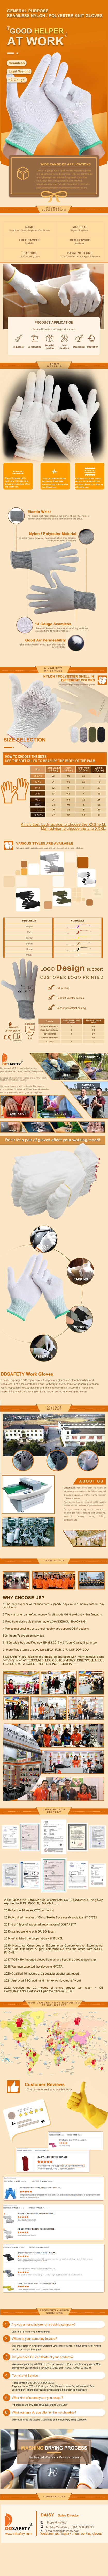 13 Gauge White Nylon/Polyester Seamless Inspection Gloves - DCH129 13 Gauge White Nylon/Polyester Seamless Inspection Gloves - DCH129 gloves,cotton gloves,Inspection gloves